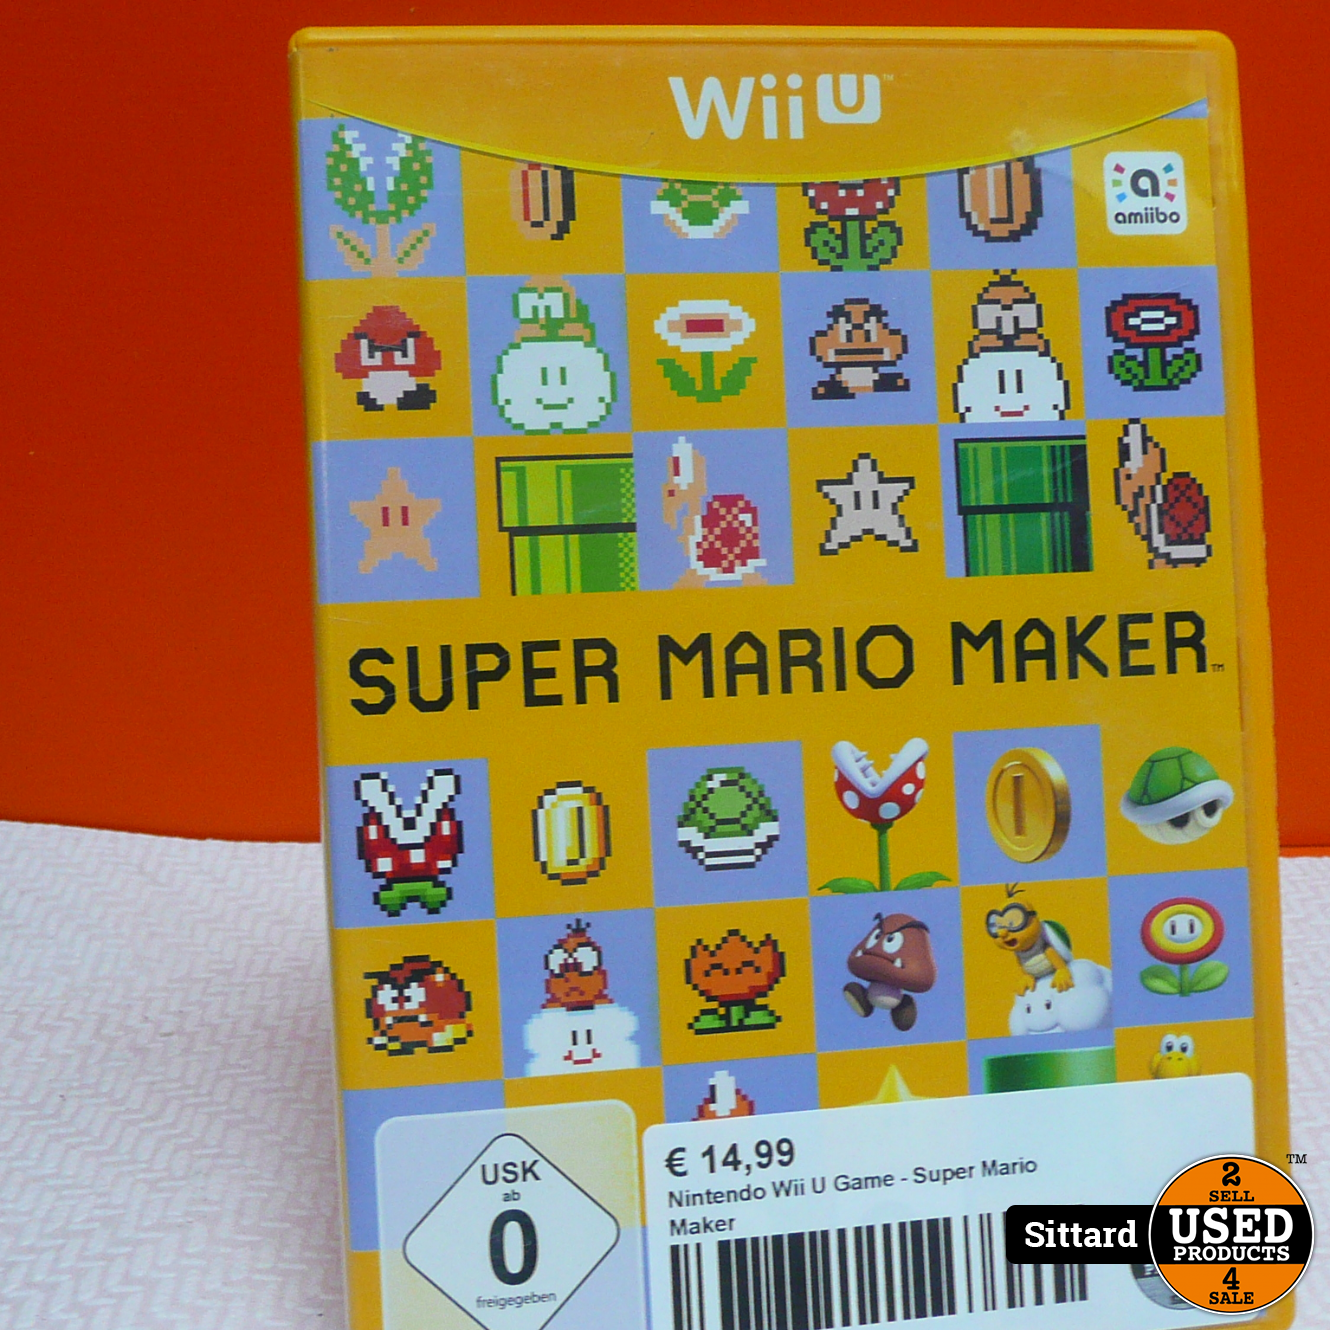 Nintendo Wii U Game - Super Mario Maker - Used Products Sittard